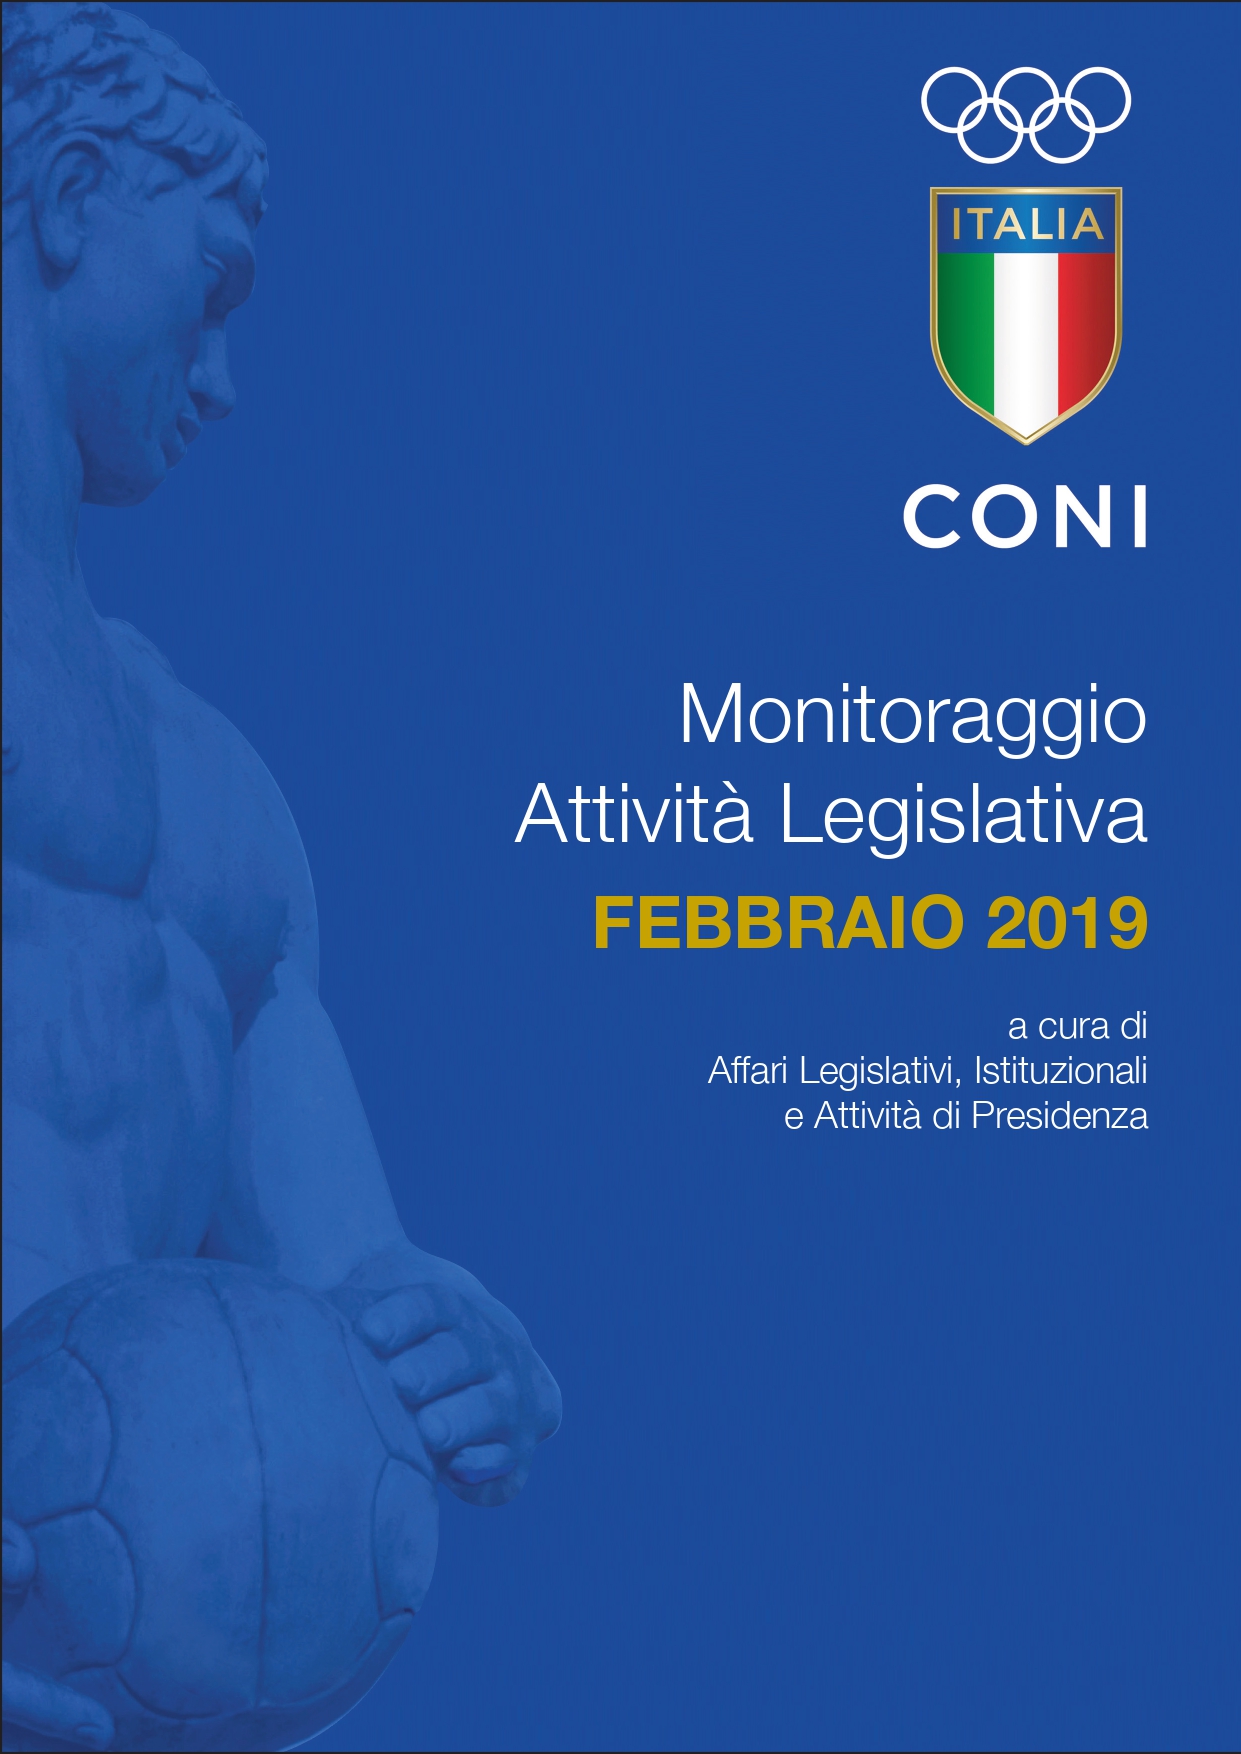 images/News_2019/Monitoraggio_Att.Legislativa_2019/Monitoraggio_attività_legislativa_2-2019.jpg